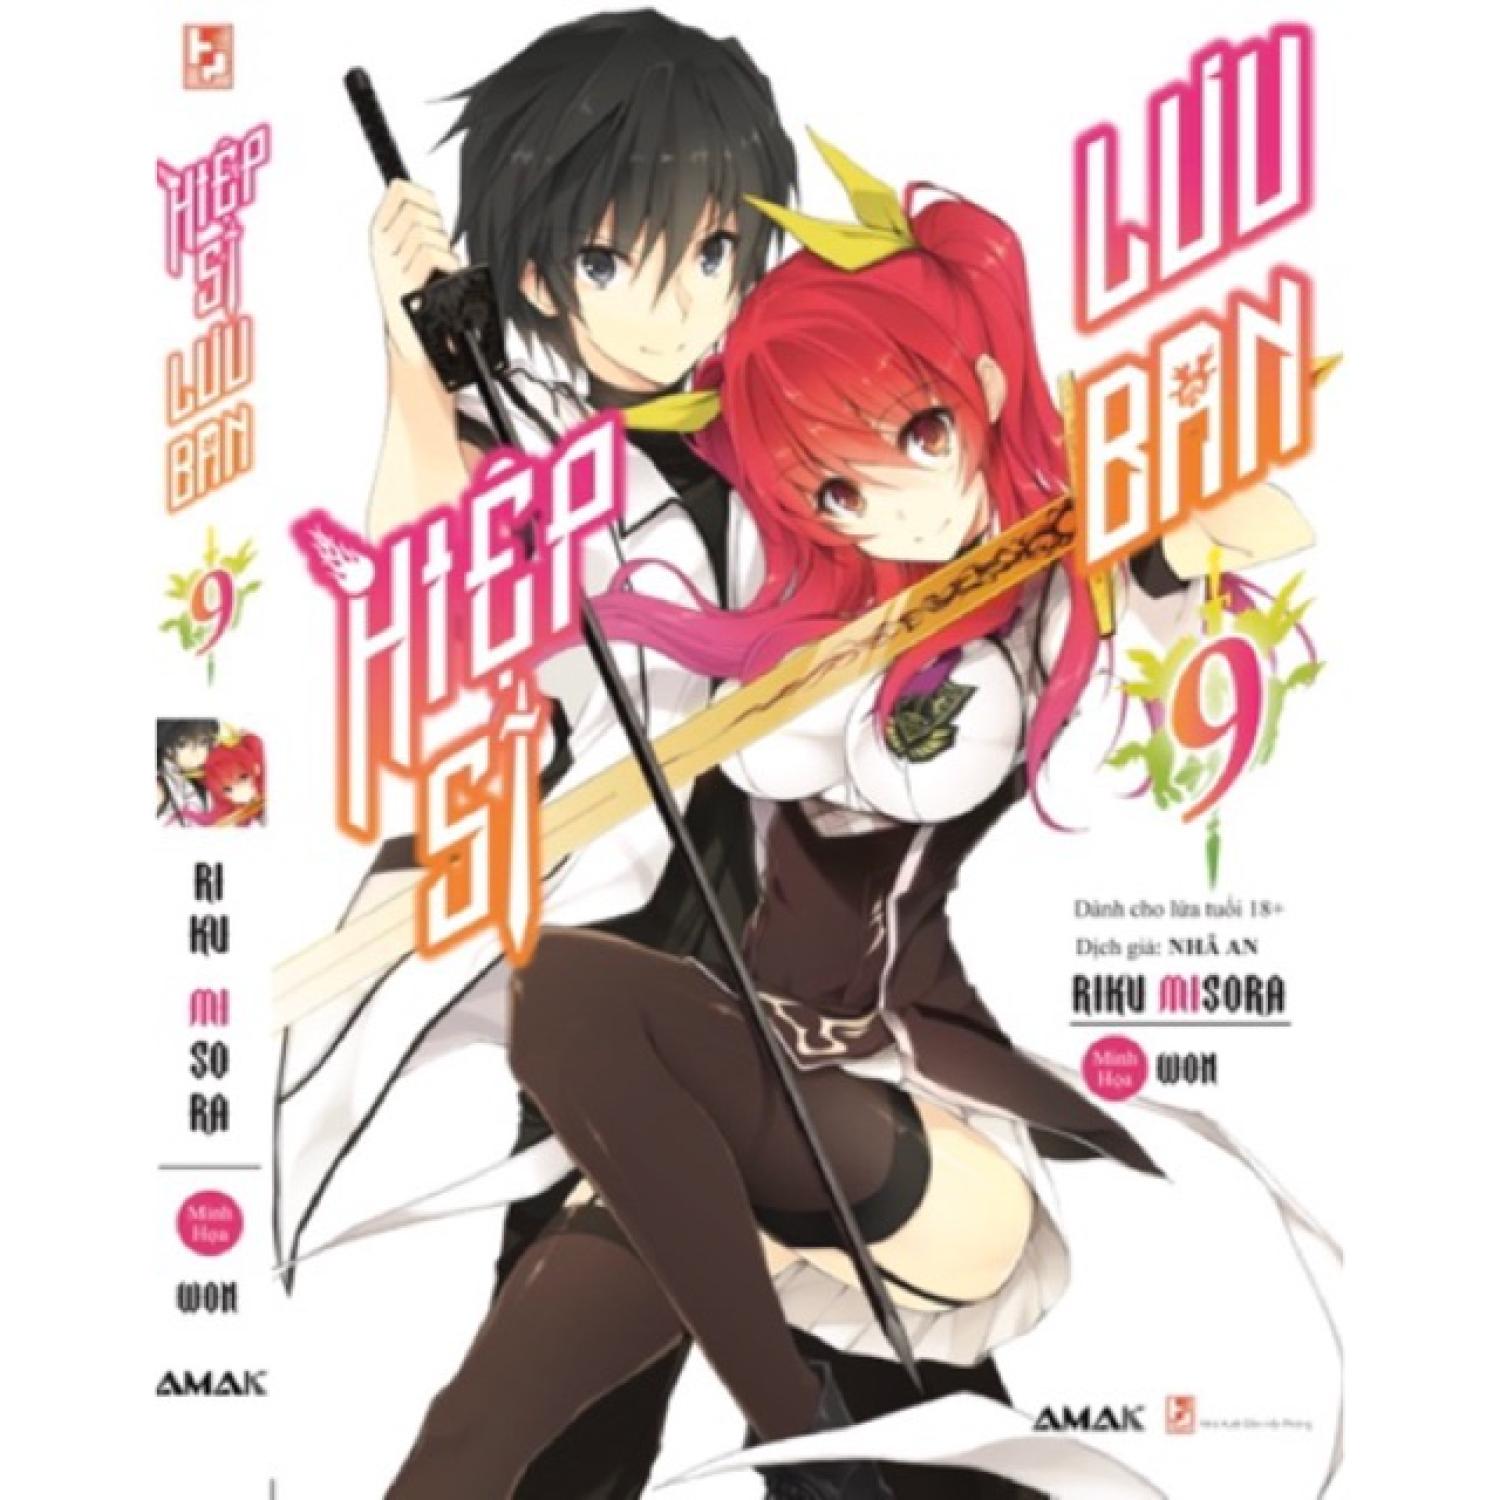 Sách Hiệp sĩ lưu ban - Tập 9 - Light Novel - AMAK